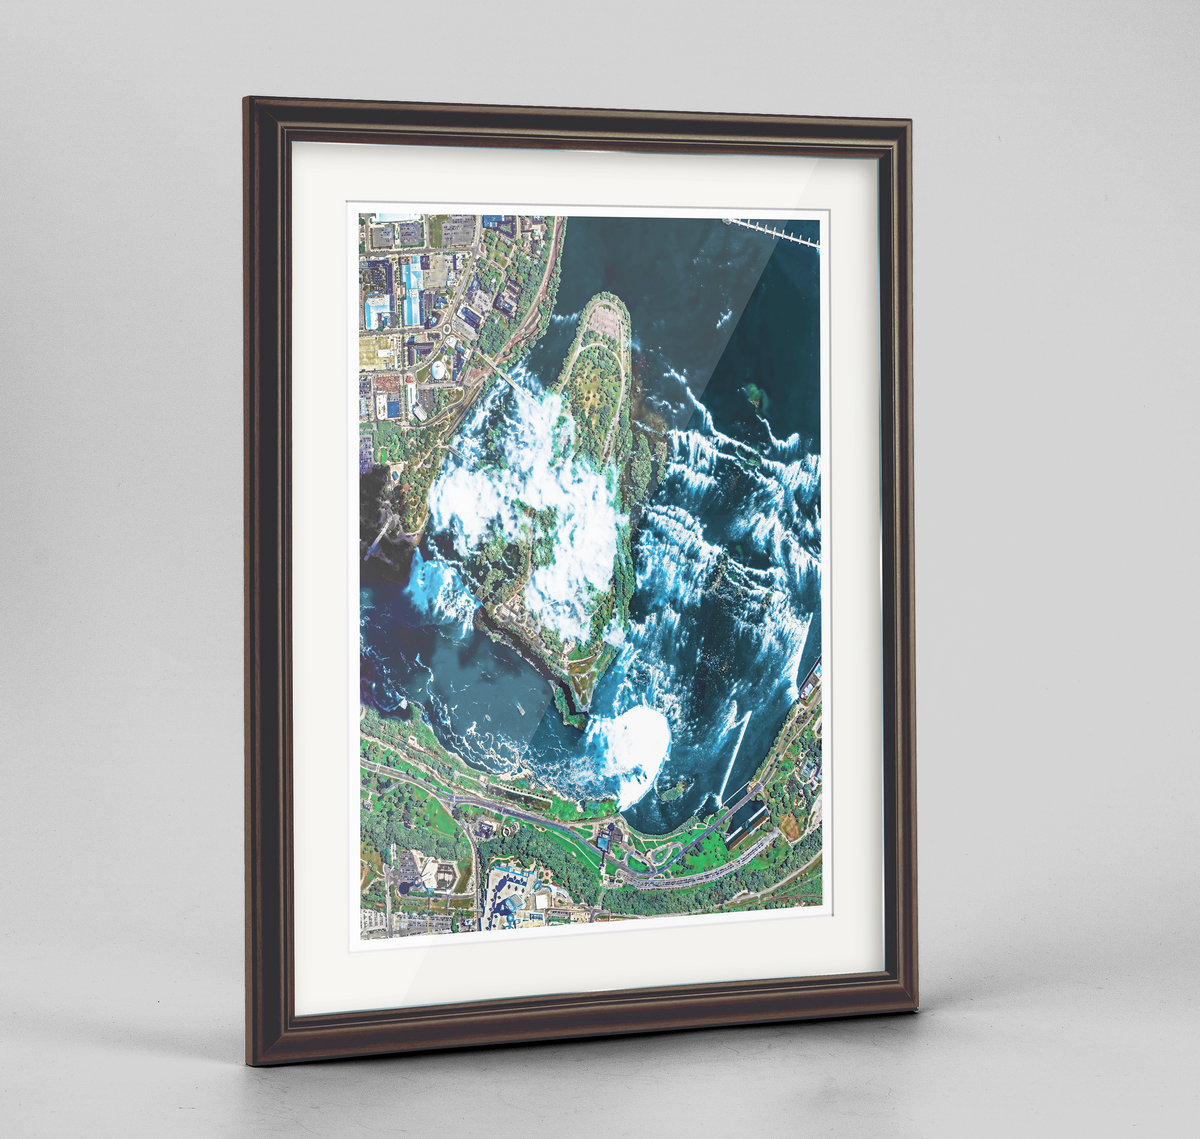 Niagara Falls Earth Photography Art Print - Framed